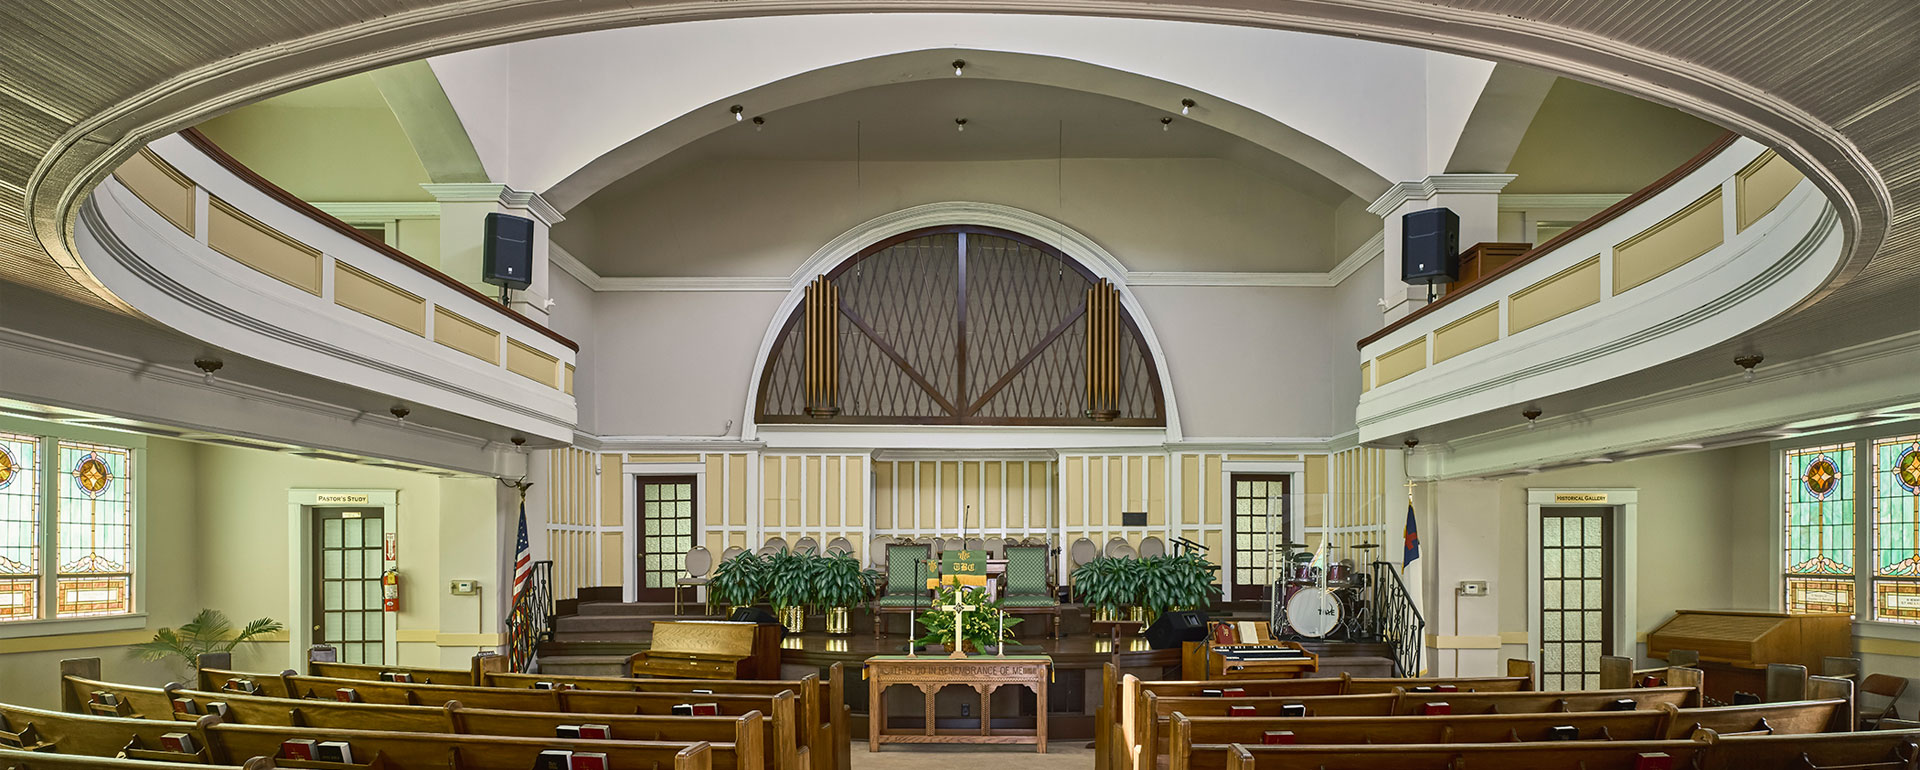 Tabernacle Baptist Church sanctuary